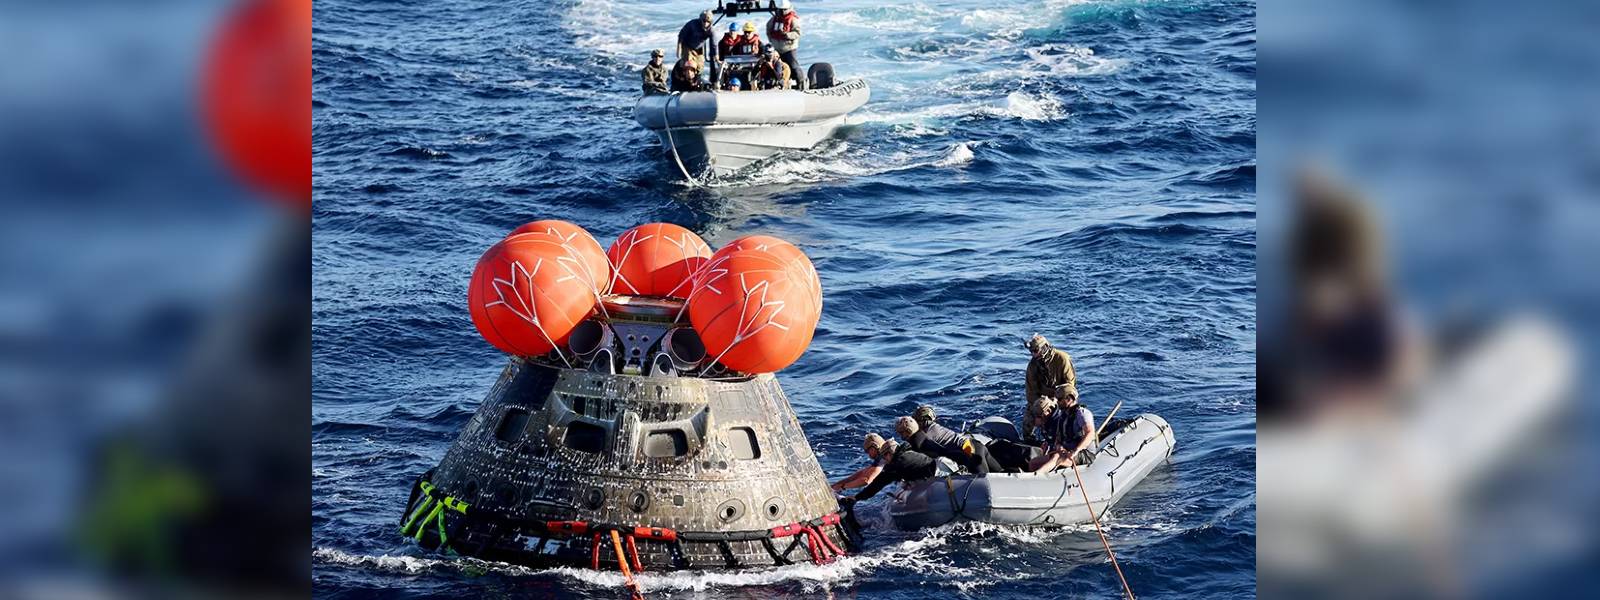 NASA's Orion capsule makes safe return to Earth